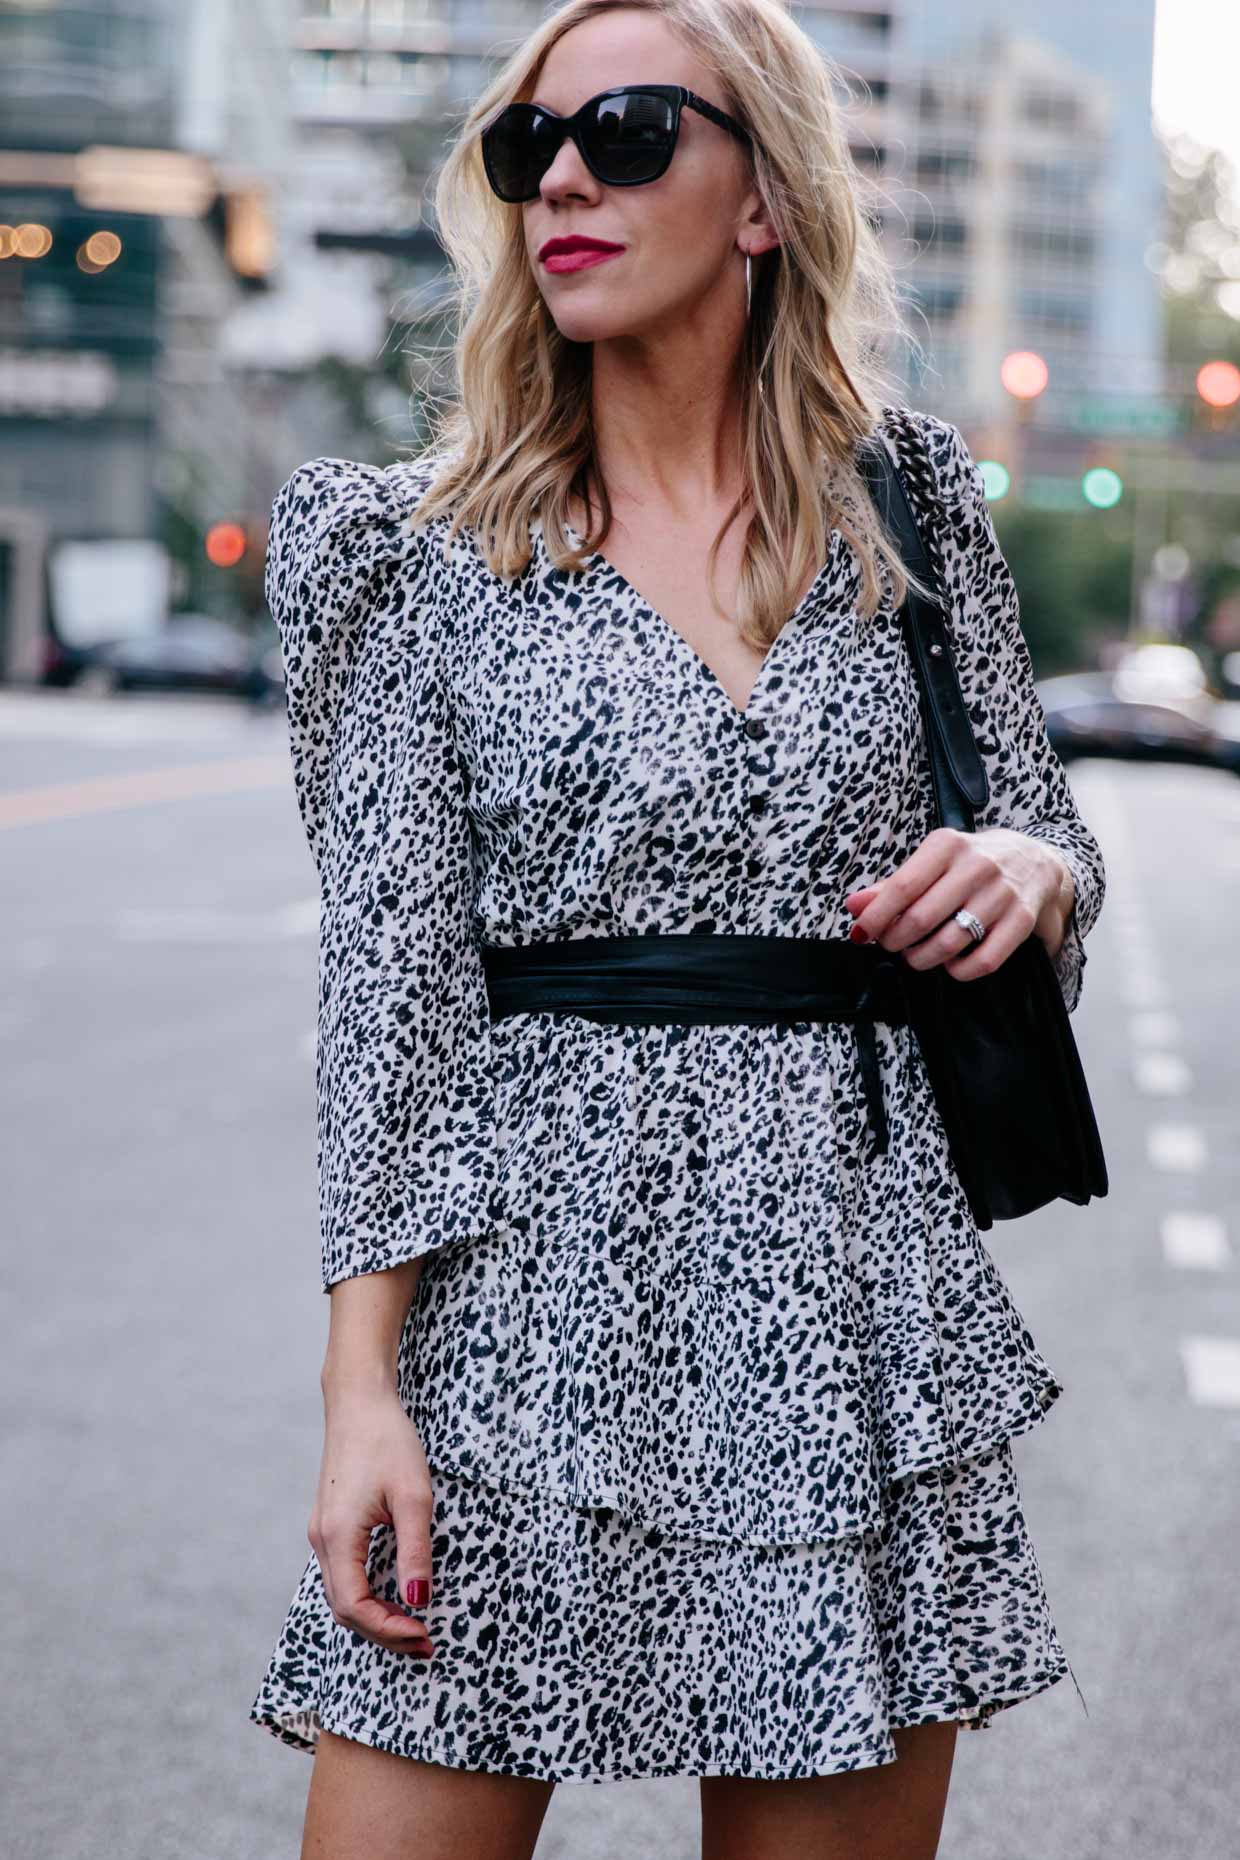 Meagan Brandon fashion blogger of Meagan's Moda shows leopard